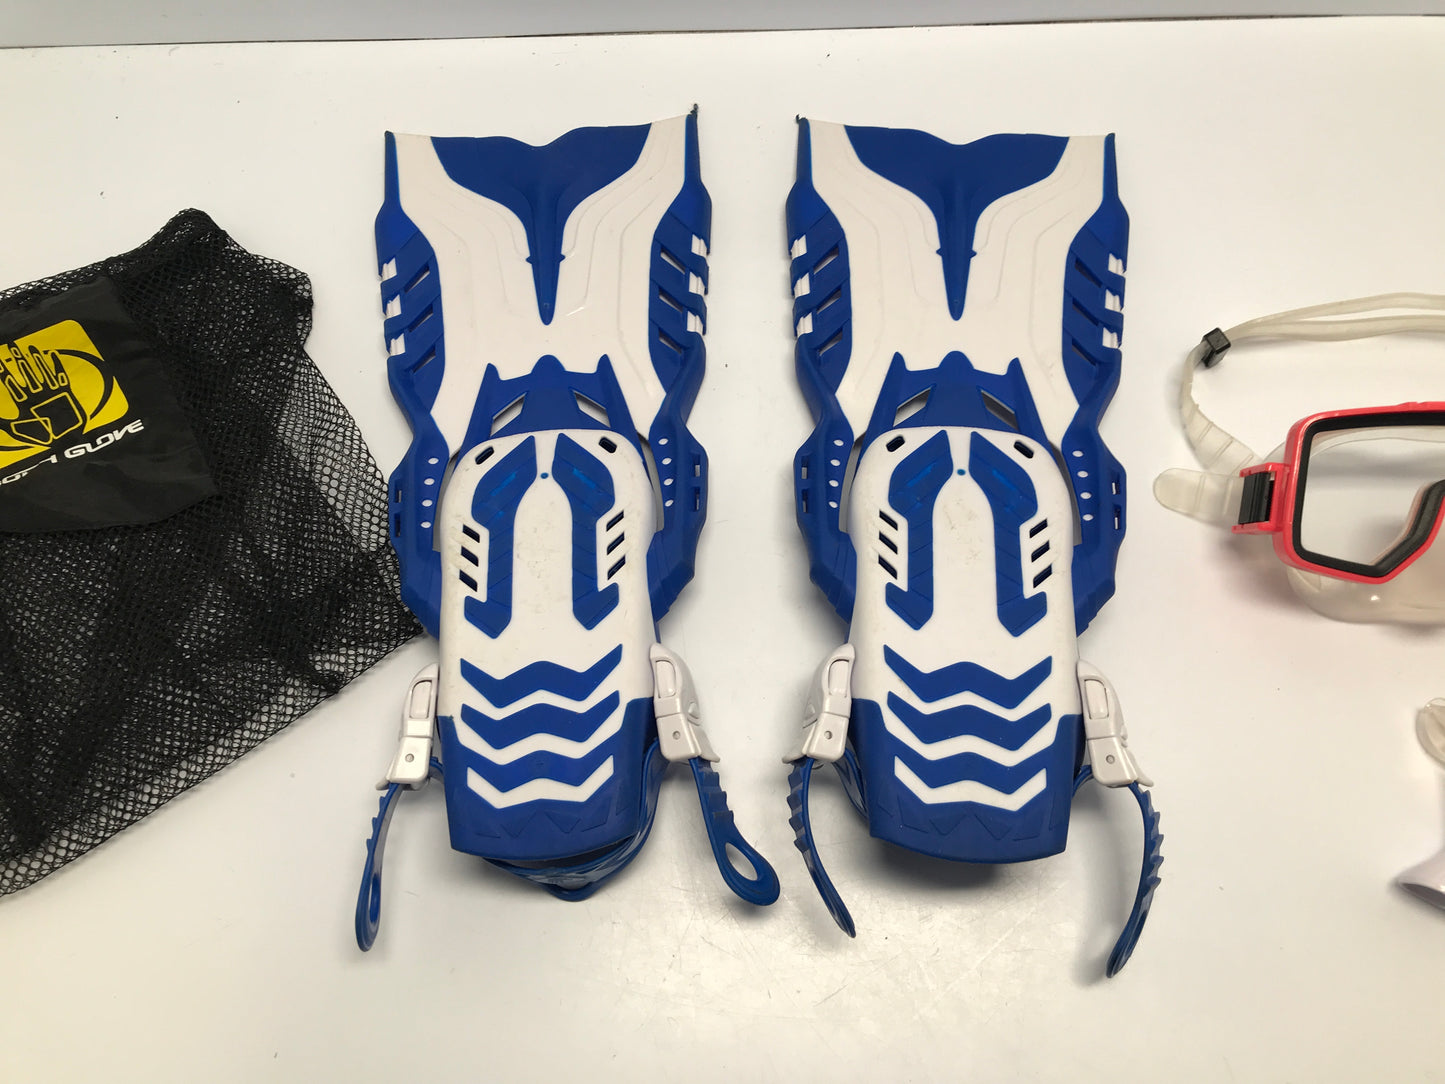 Snorkel Dive Fins Junior Child 5-8 Shoe Size Blue White Pink Body Glove